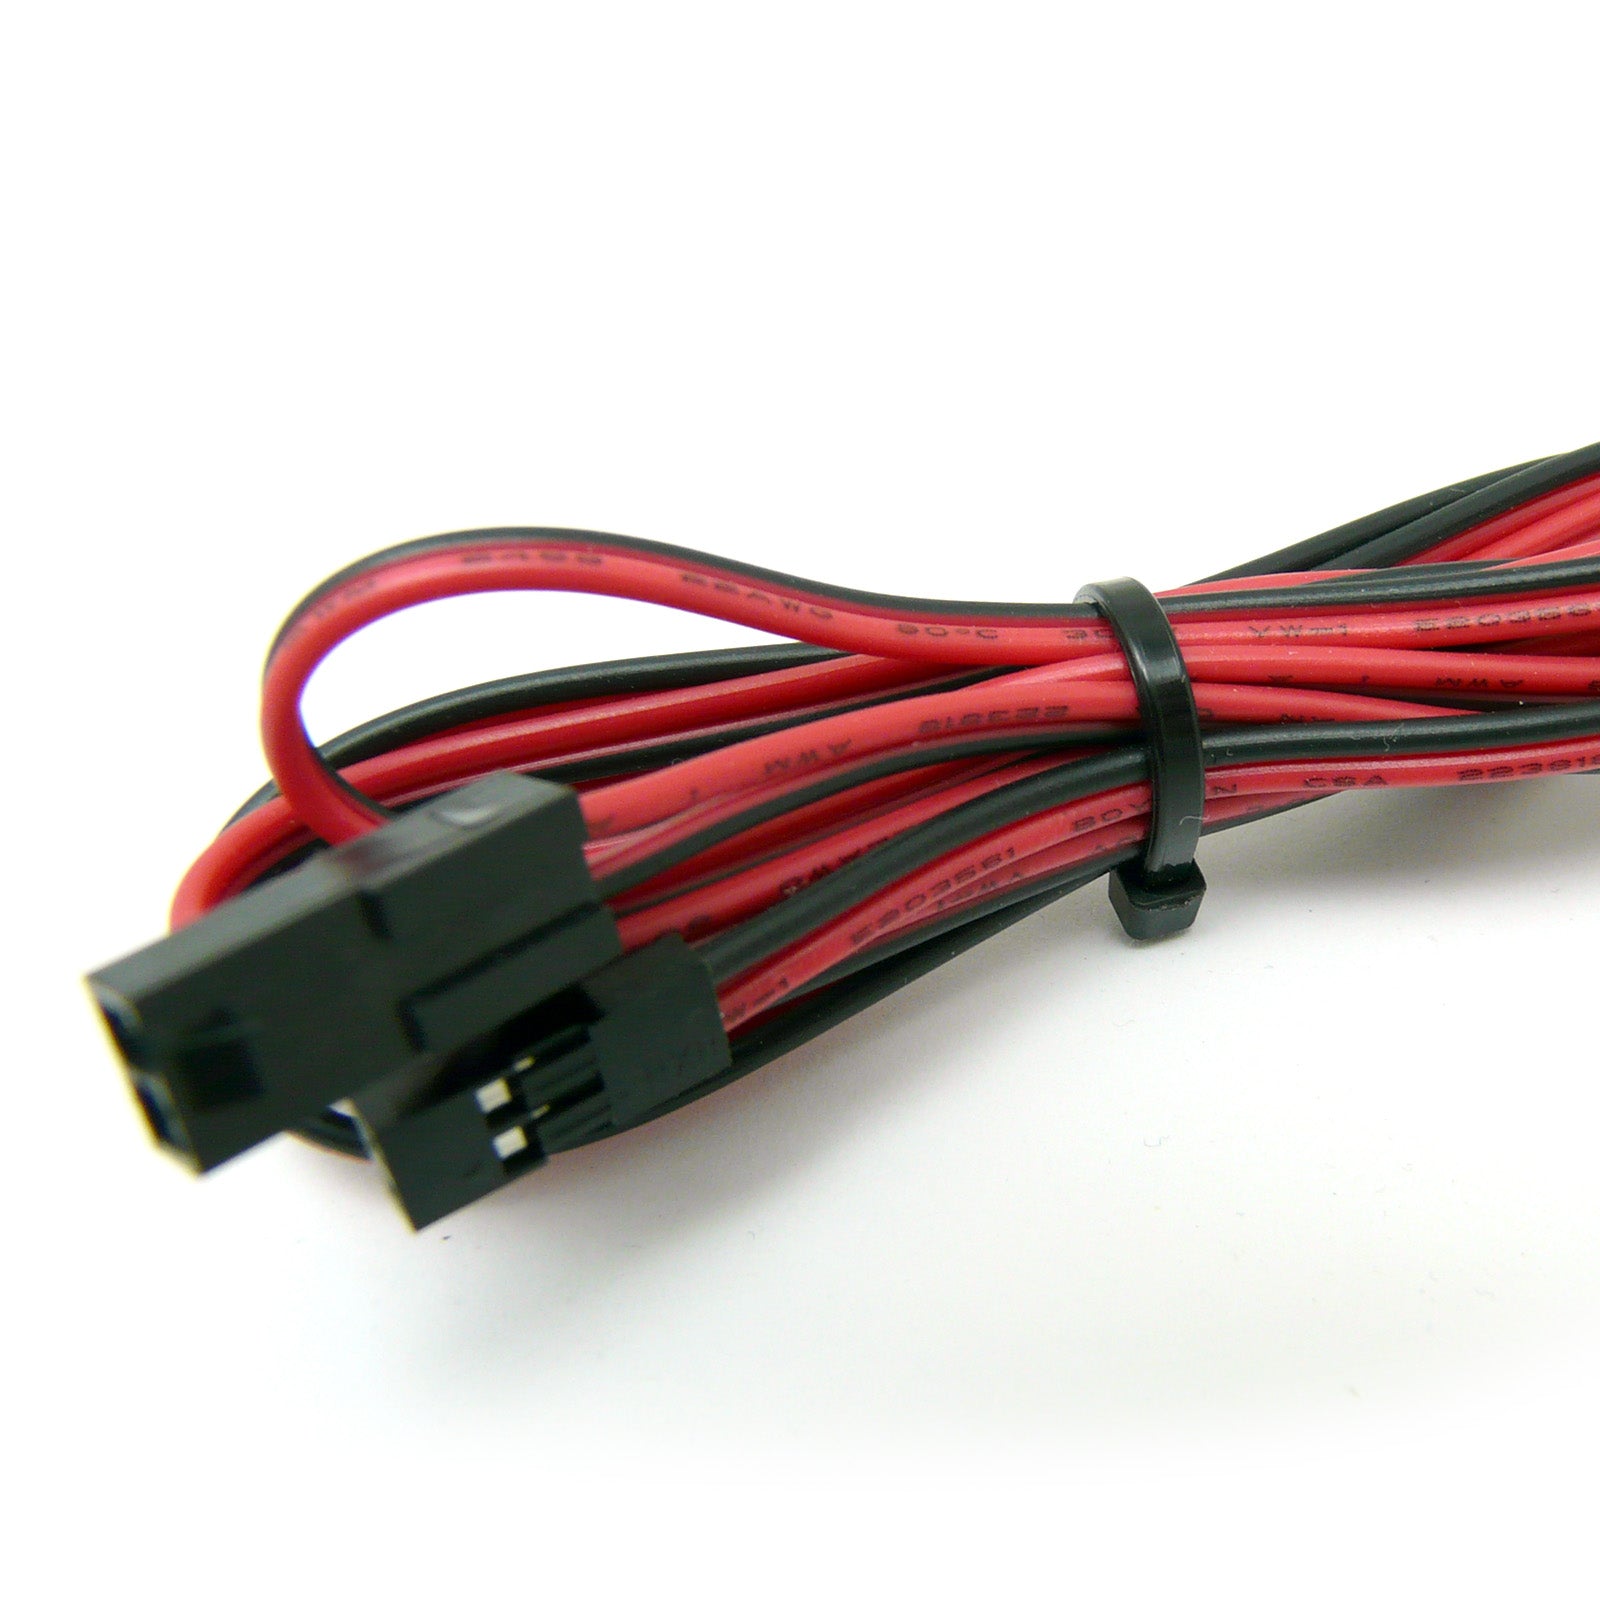 E3D Fan & Thermistor Cartridge Cable